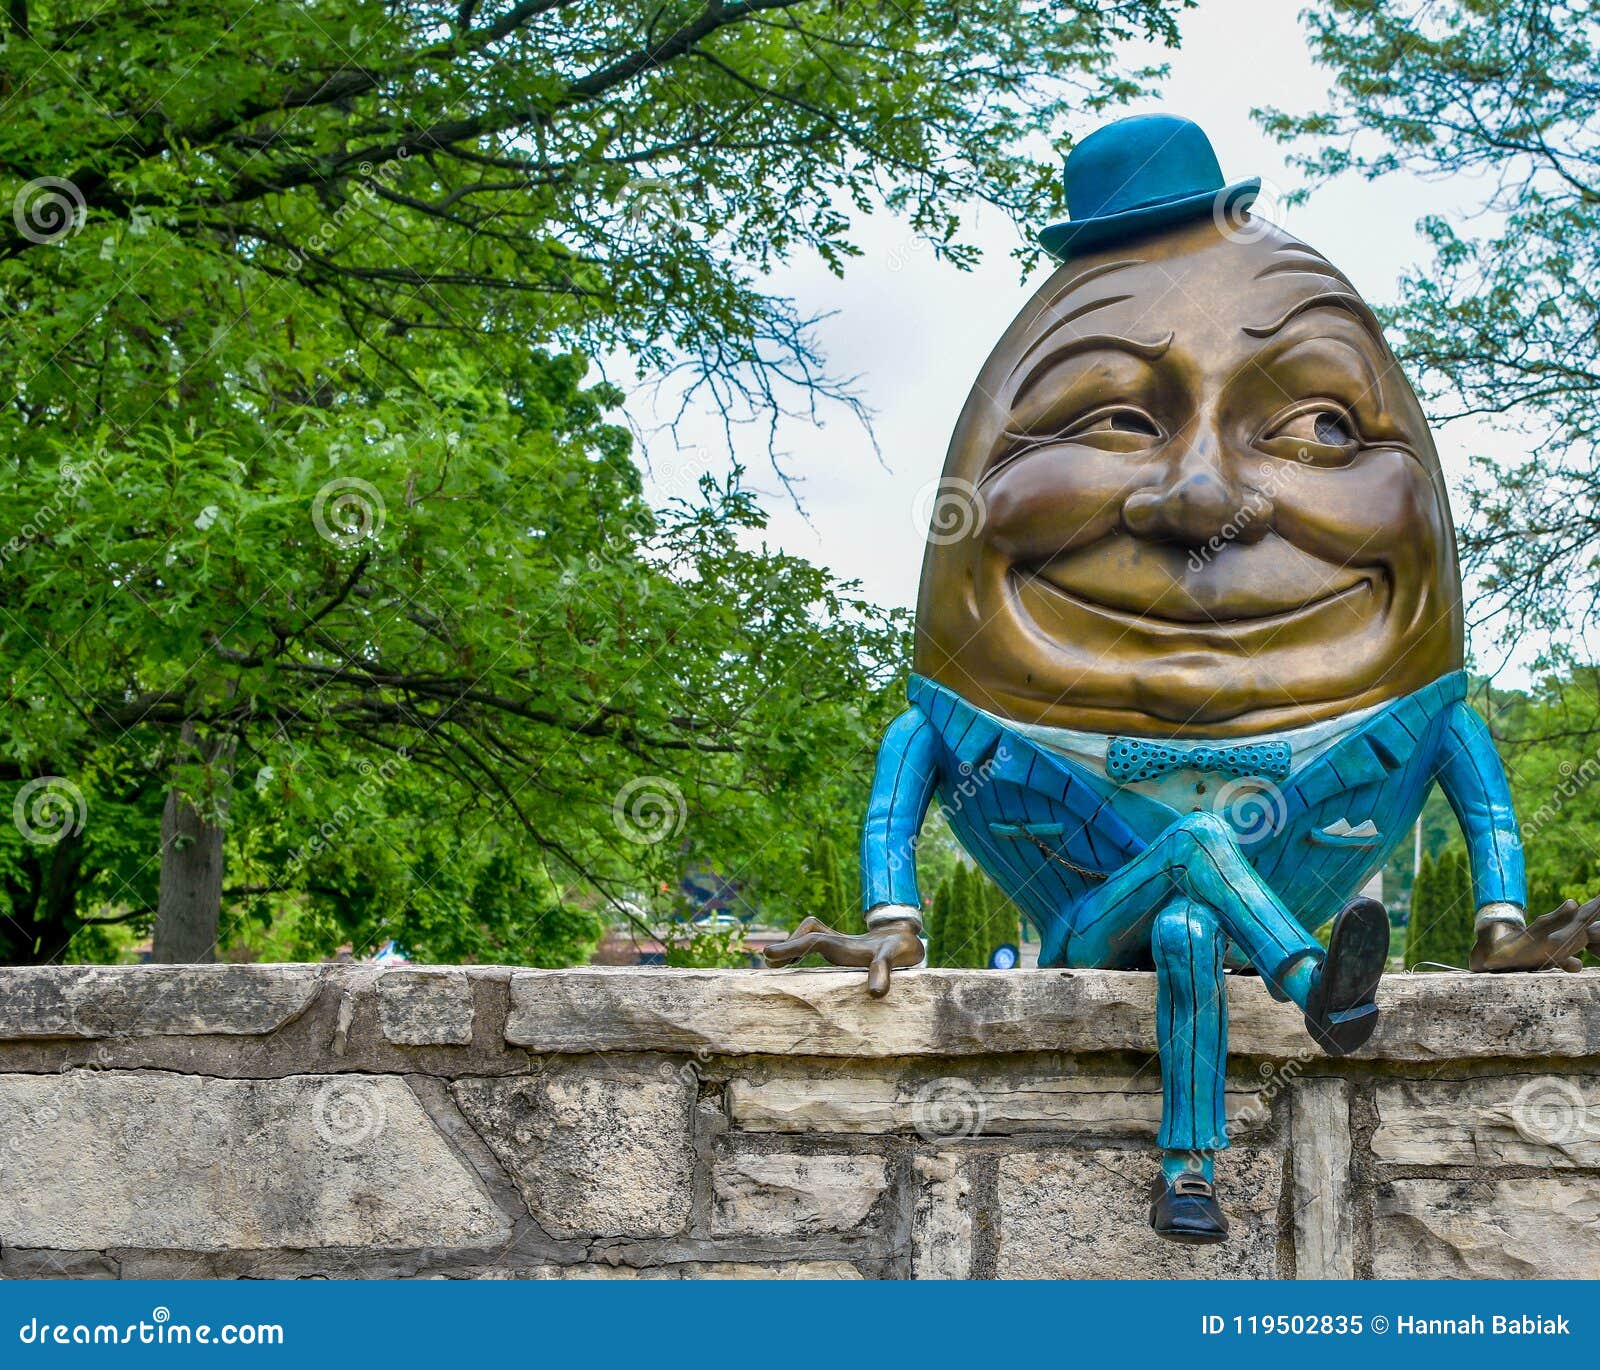 Mr. Eggwards - Humpty Dumpty -Sculpture in the Park - Mt 